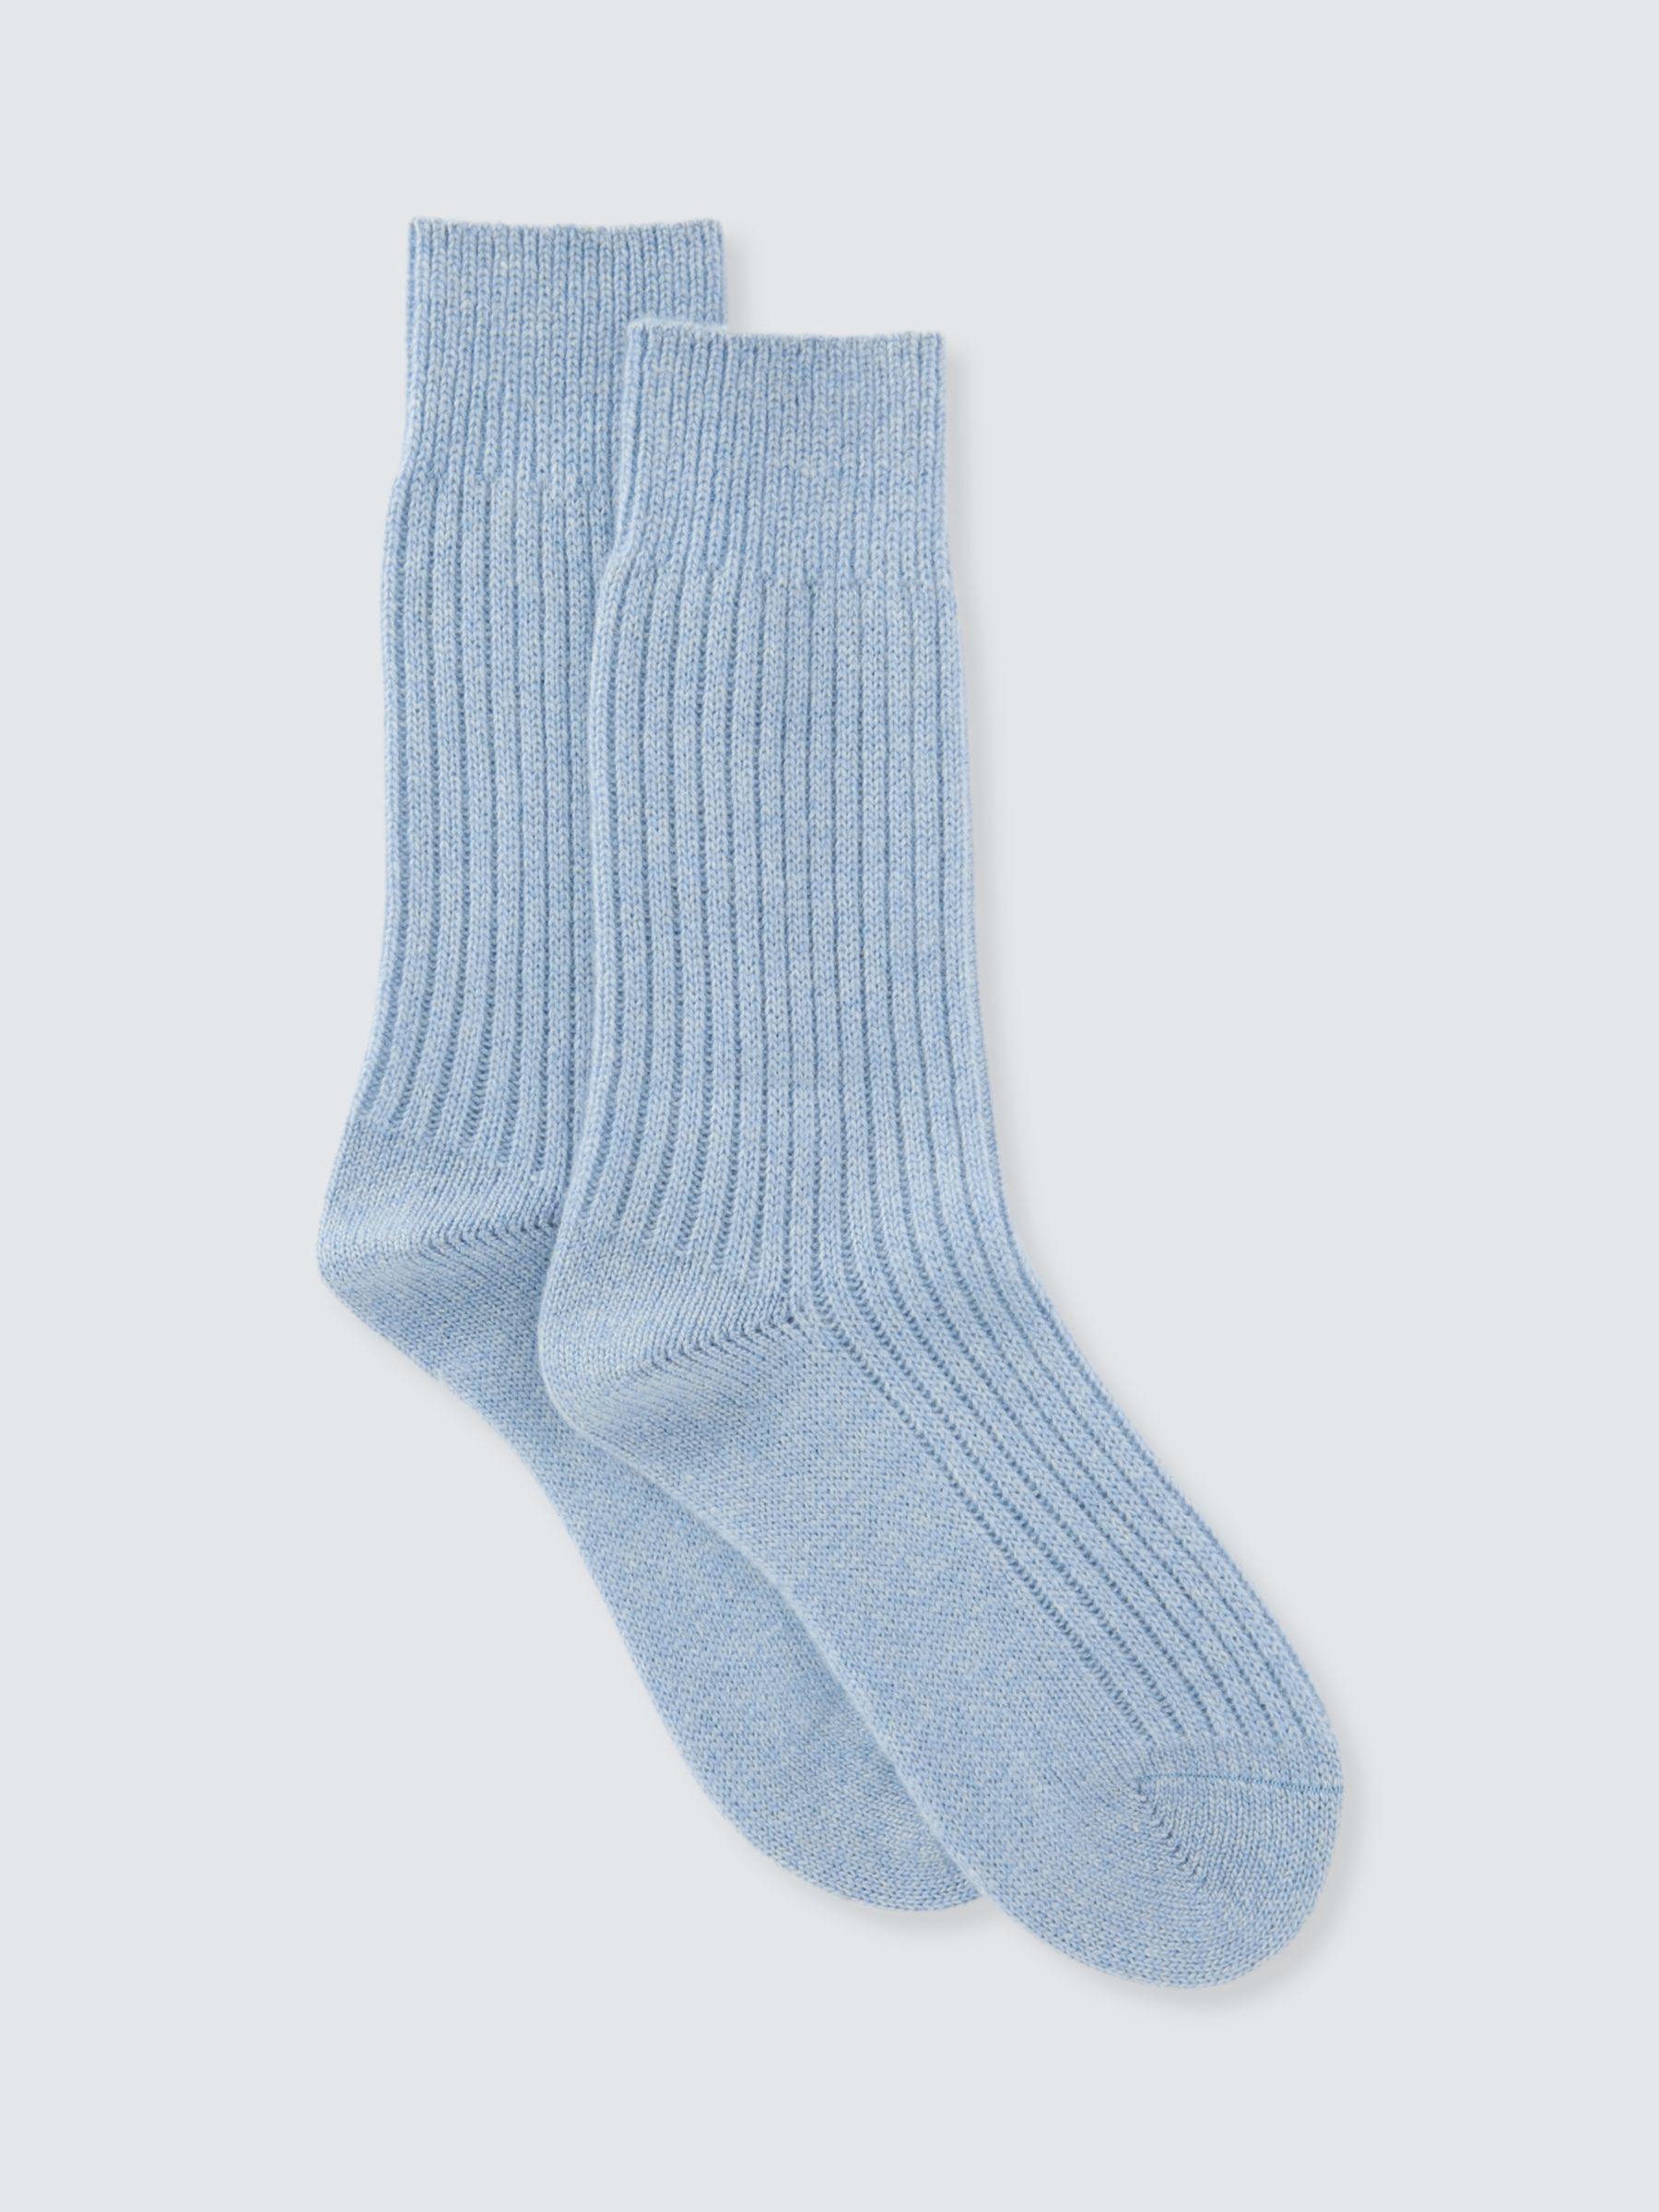 John Lewis Cashmere Rich Bed Socks, Pale Blue at John Lewis & Partners